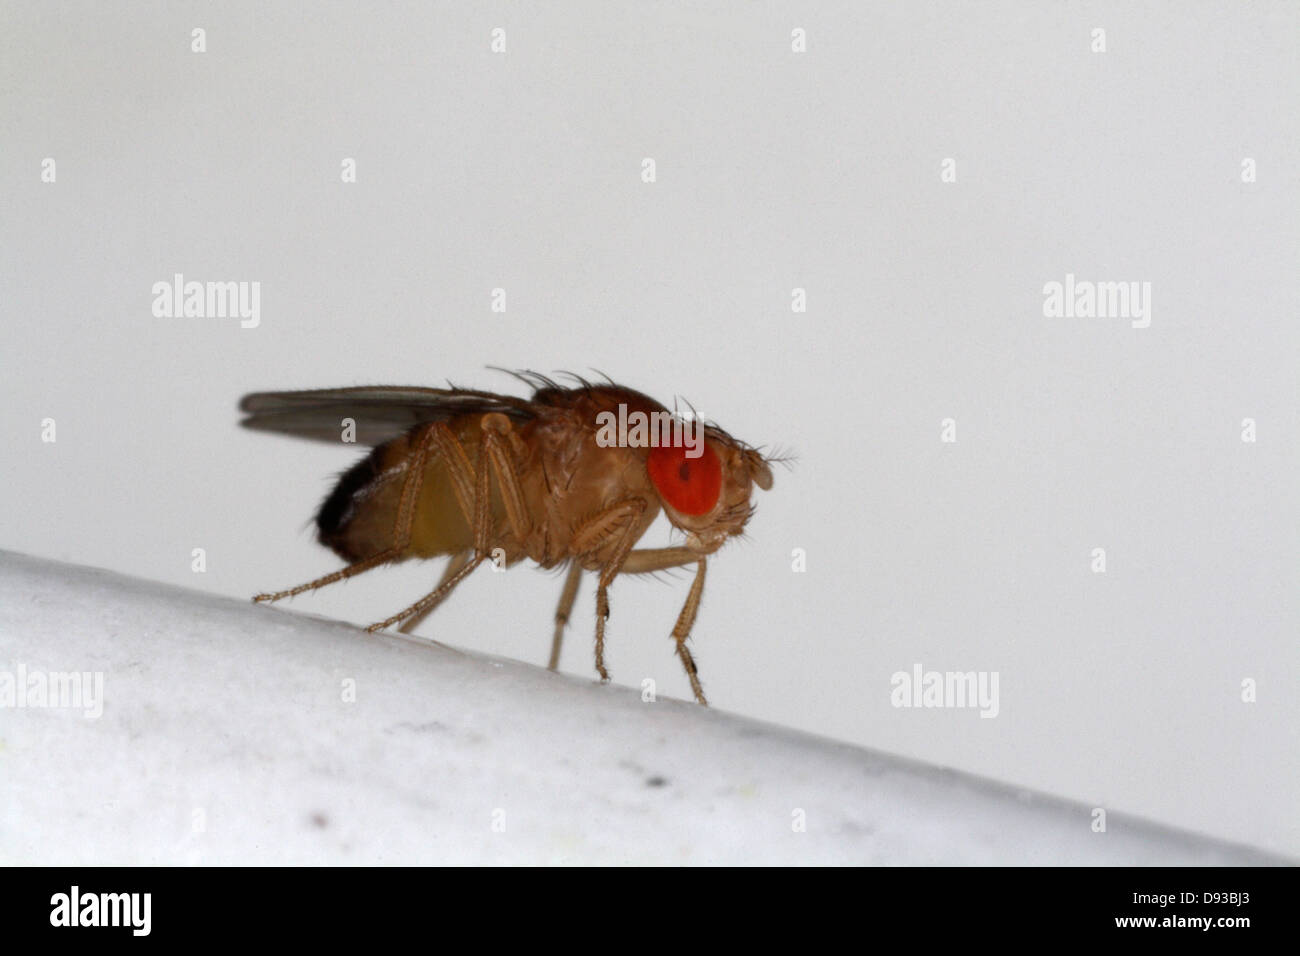 Drosophila melanogaster on a plate, close-up, Sweden. Stock Photo